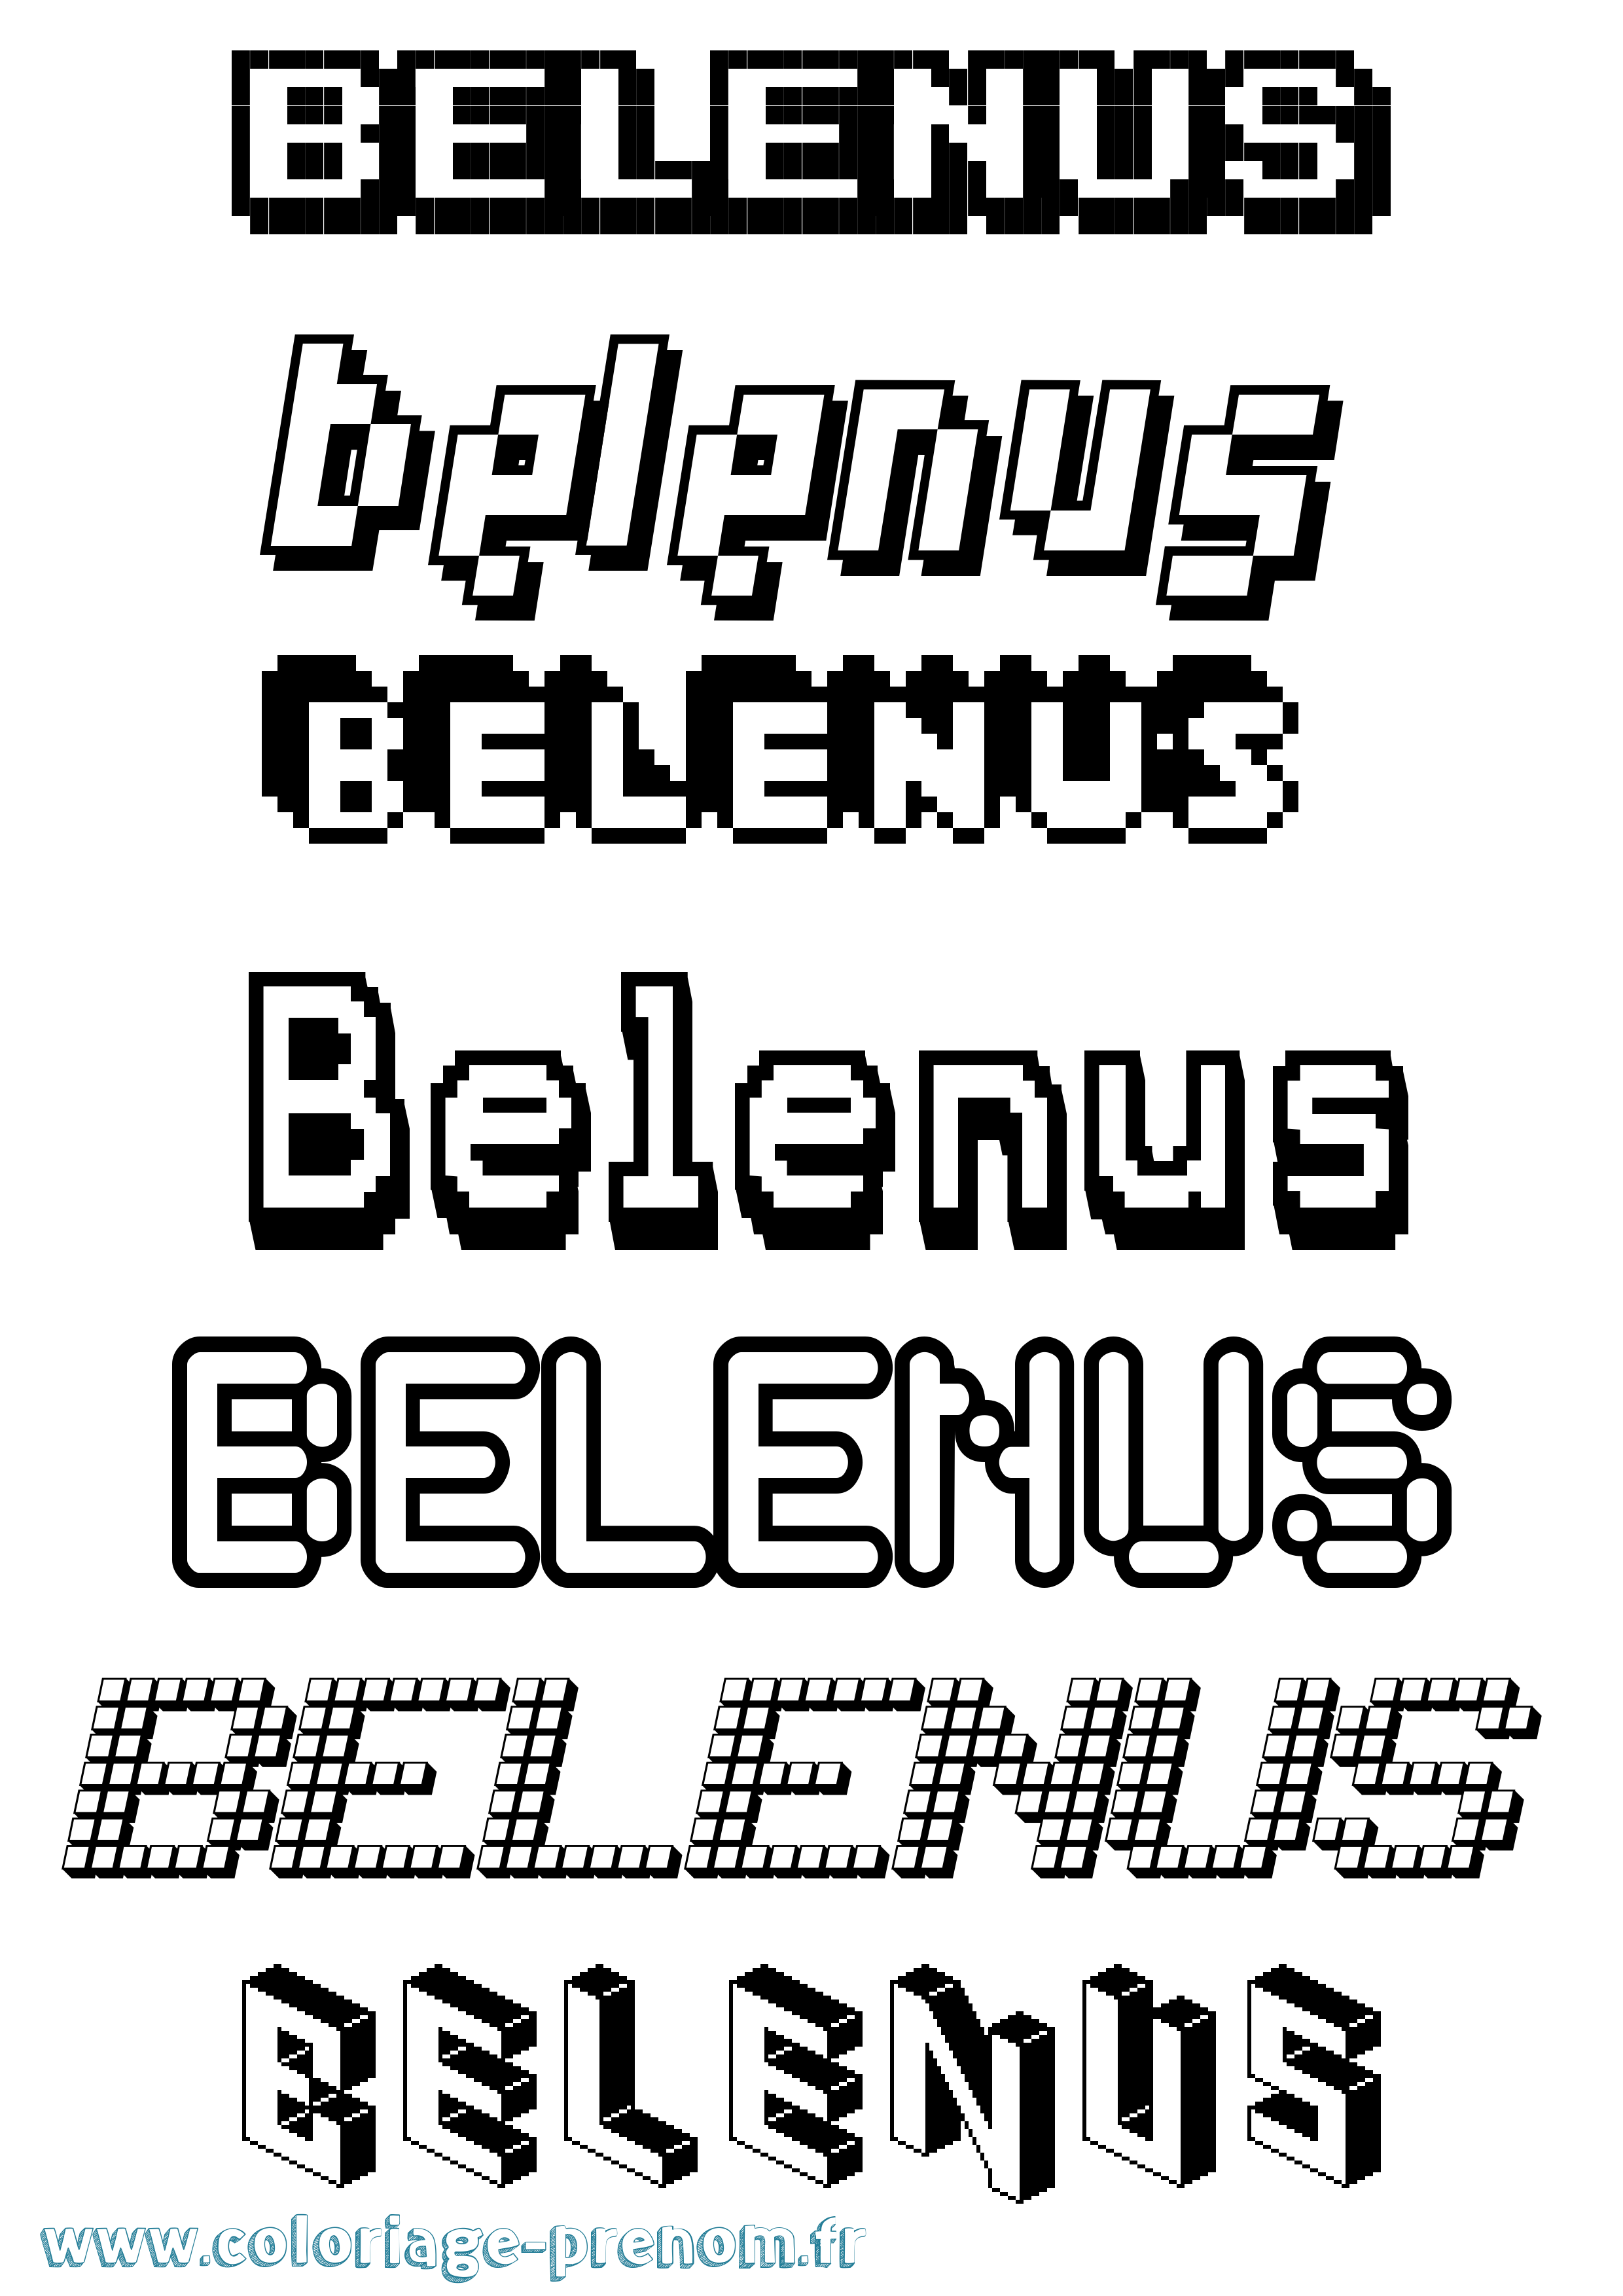 Coloriage prénom Belenus Pixel